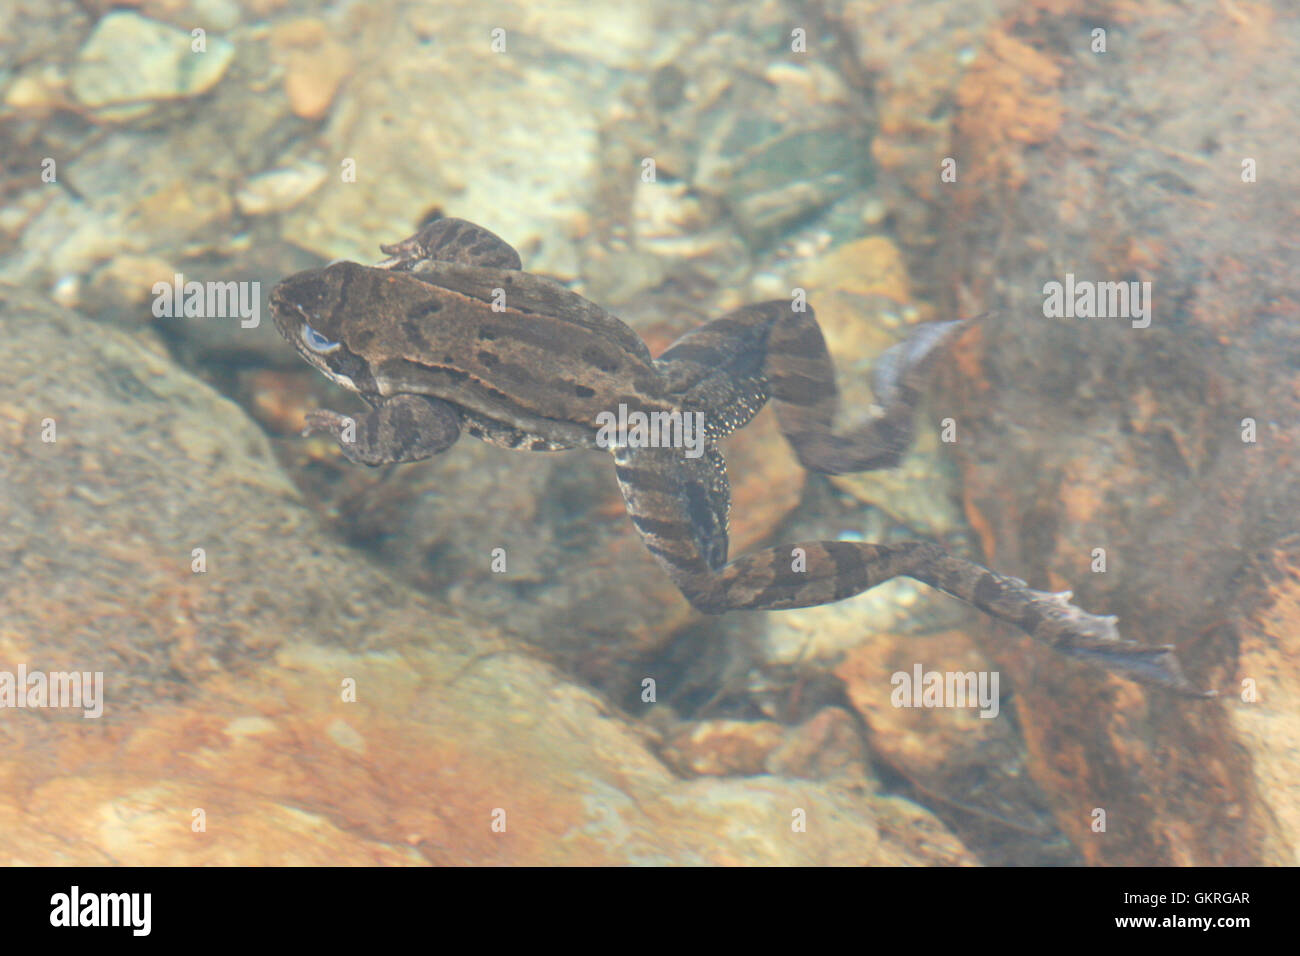 Common frog ( Rana temporaria ) swimming underwater, italian Alps Stock Photo